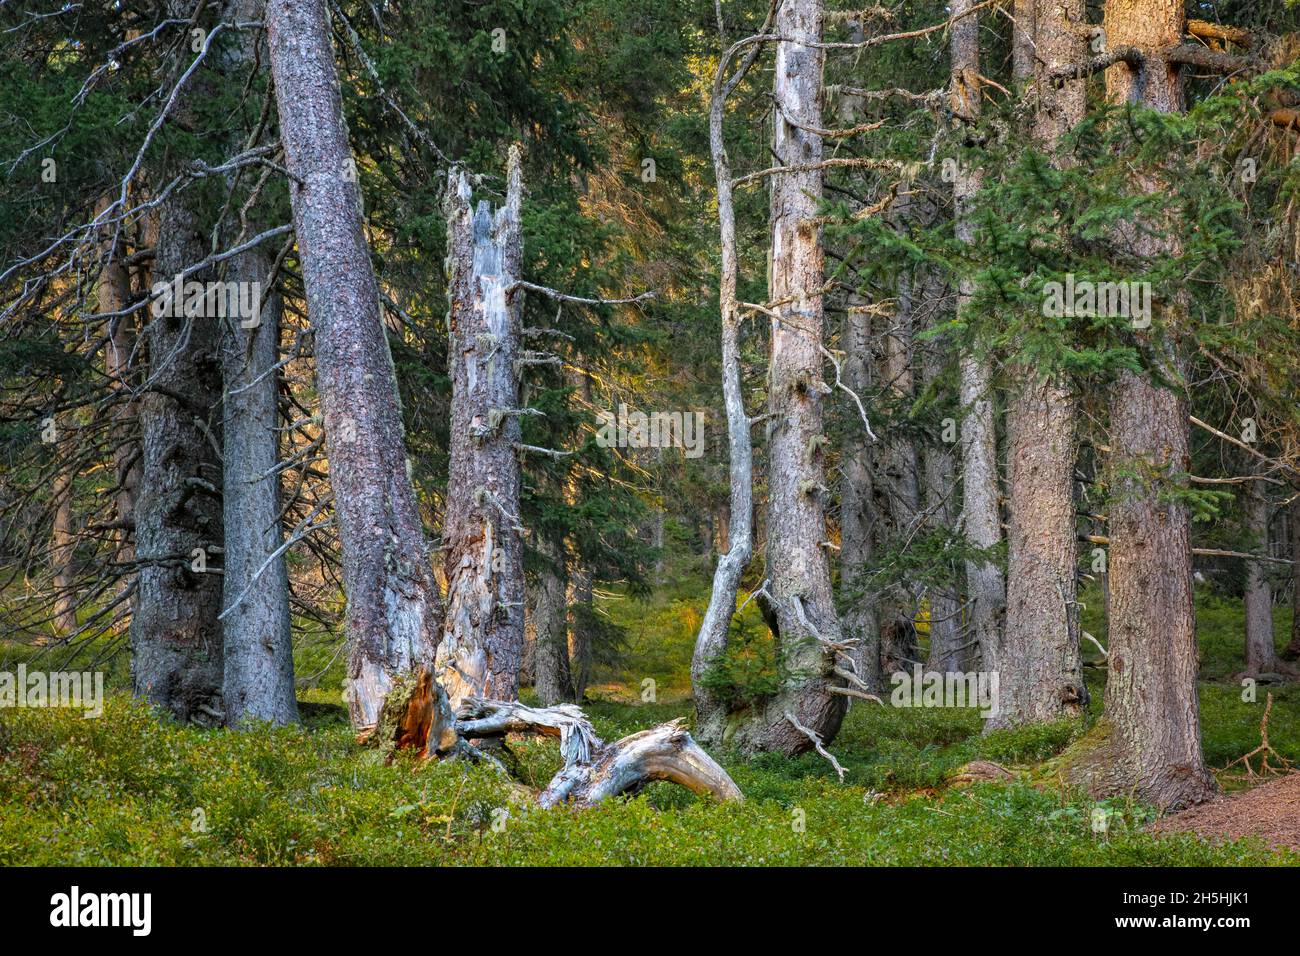 European spruce (Picea abies) with an understory of dwarf shrubs, Naunz, Tuxer Voralpen, Tyrol, Austria Stock Photo